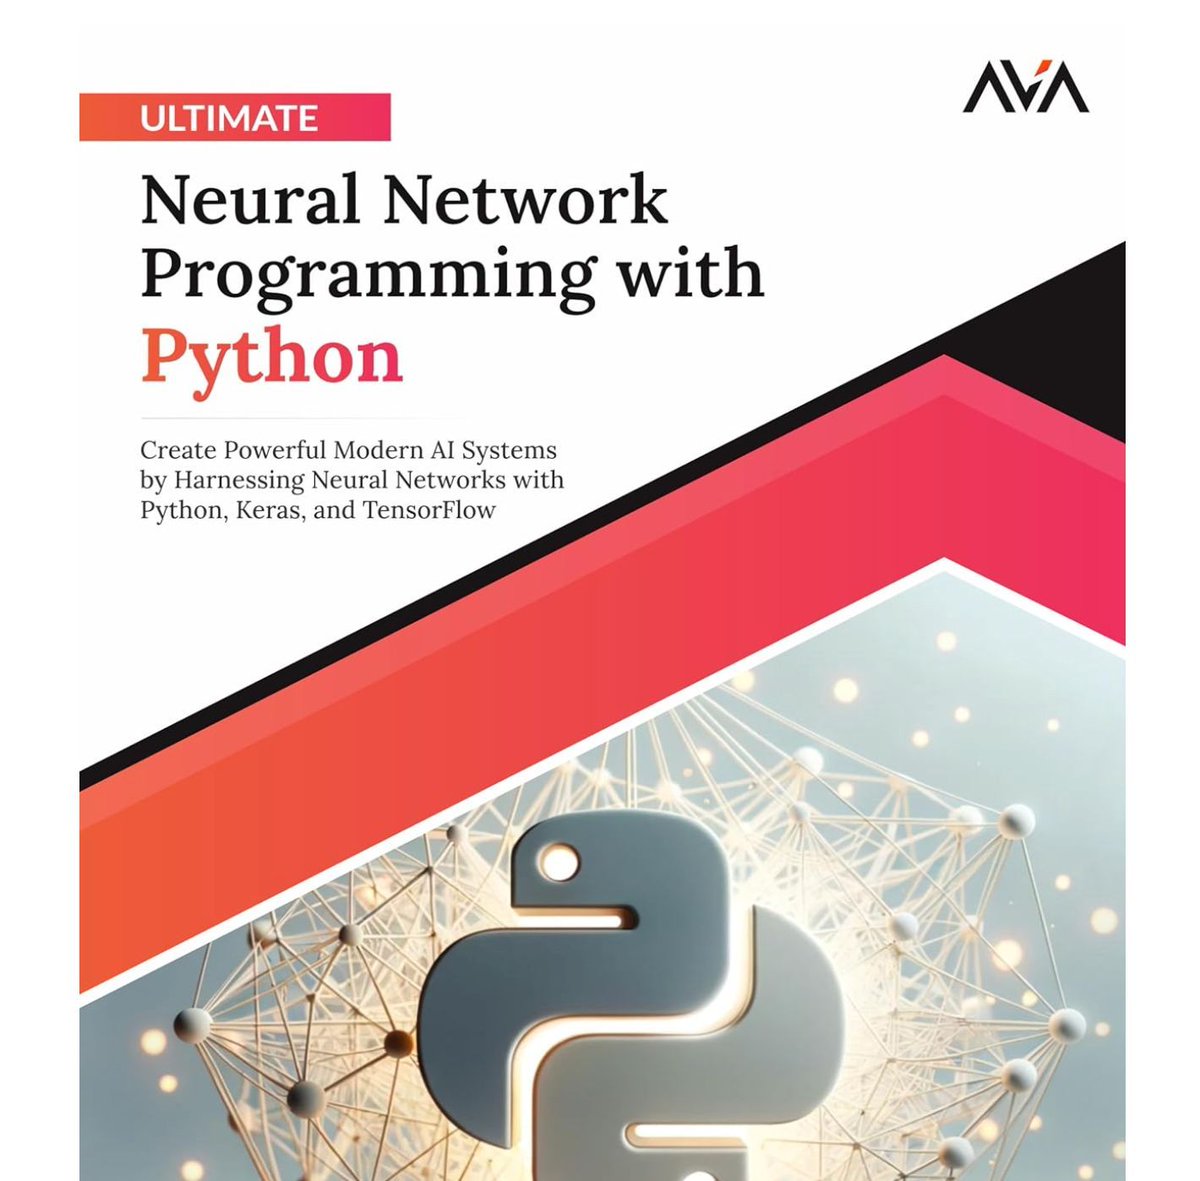 Ultimate Neural Network Programming with Python! #BigData #Analytics #DataScience #AI #MachineLearning #IoT #IIoT #PyTorch #Python #RStats #TensorFlow #Java #CloudComputing #Serverless #DataScientist #Linux #Books #Programming #Coding #100DaysofCode  
geni.us/Neural-Nets-Py…